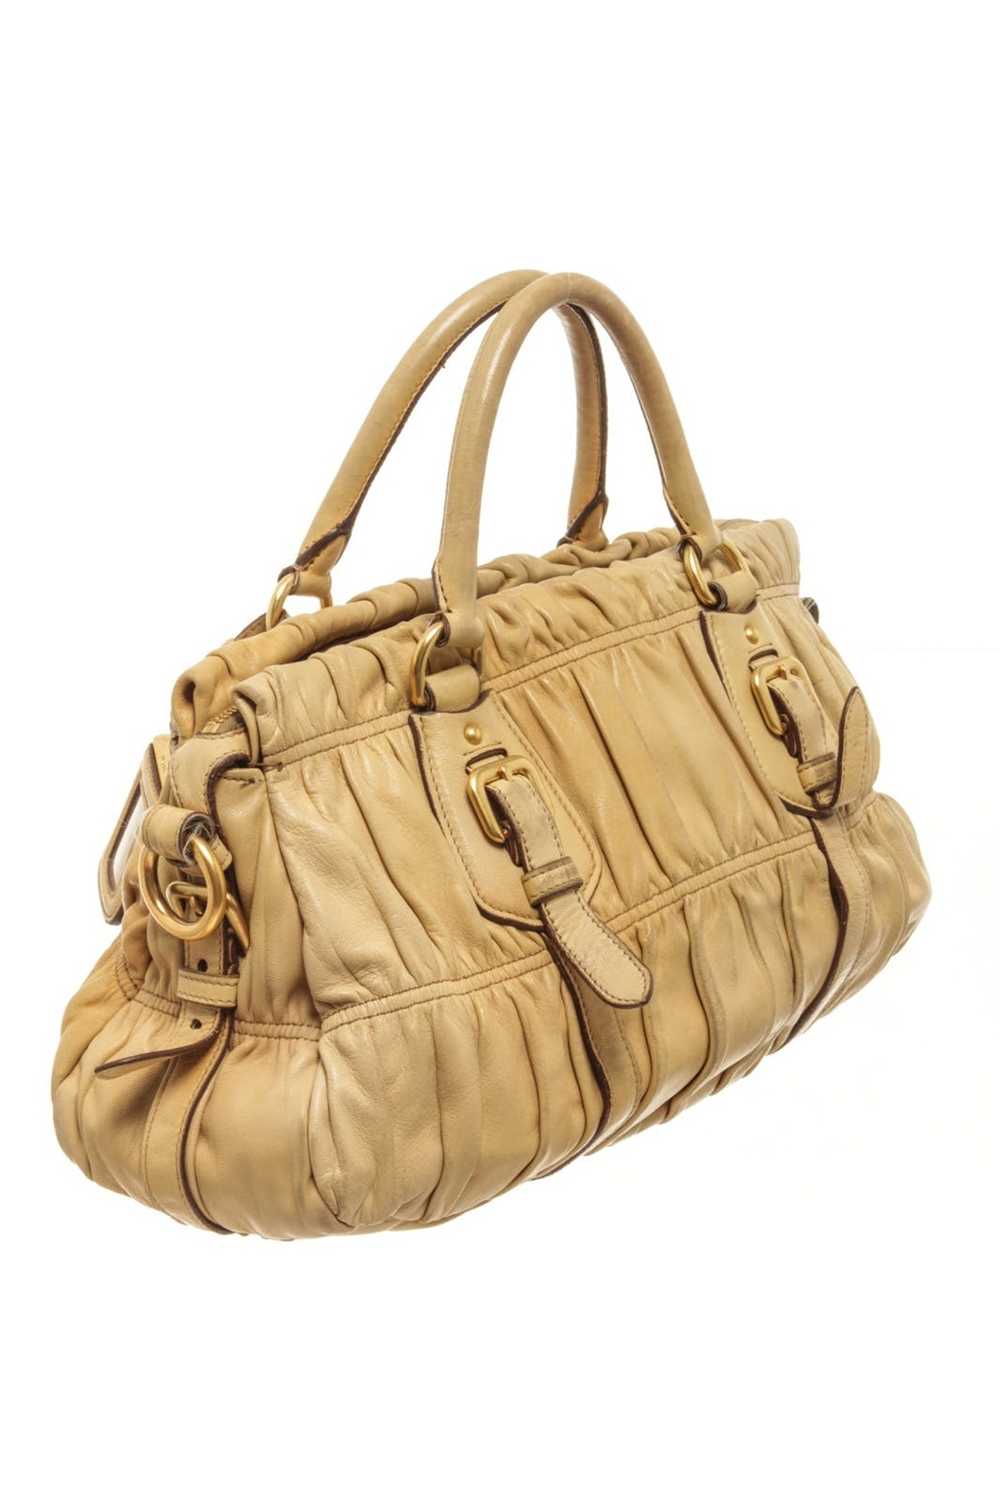 Prada Prada Light Brown Leather Shoulder Bag - image 4